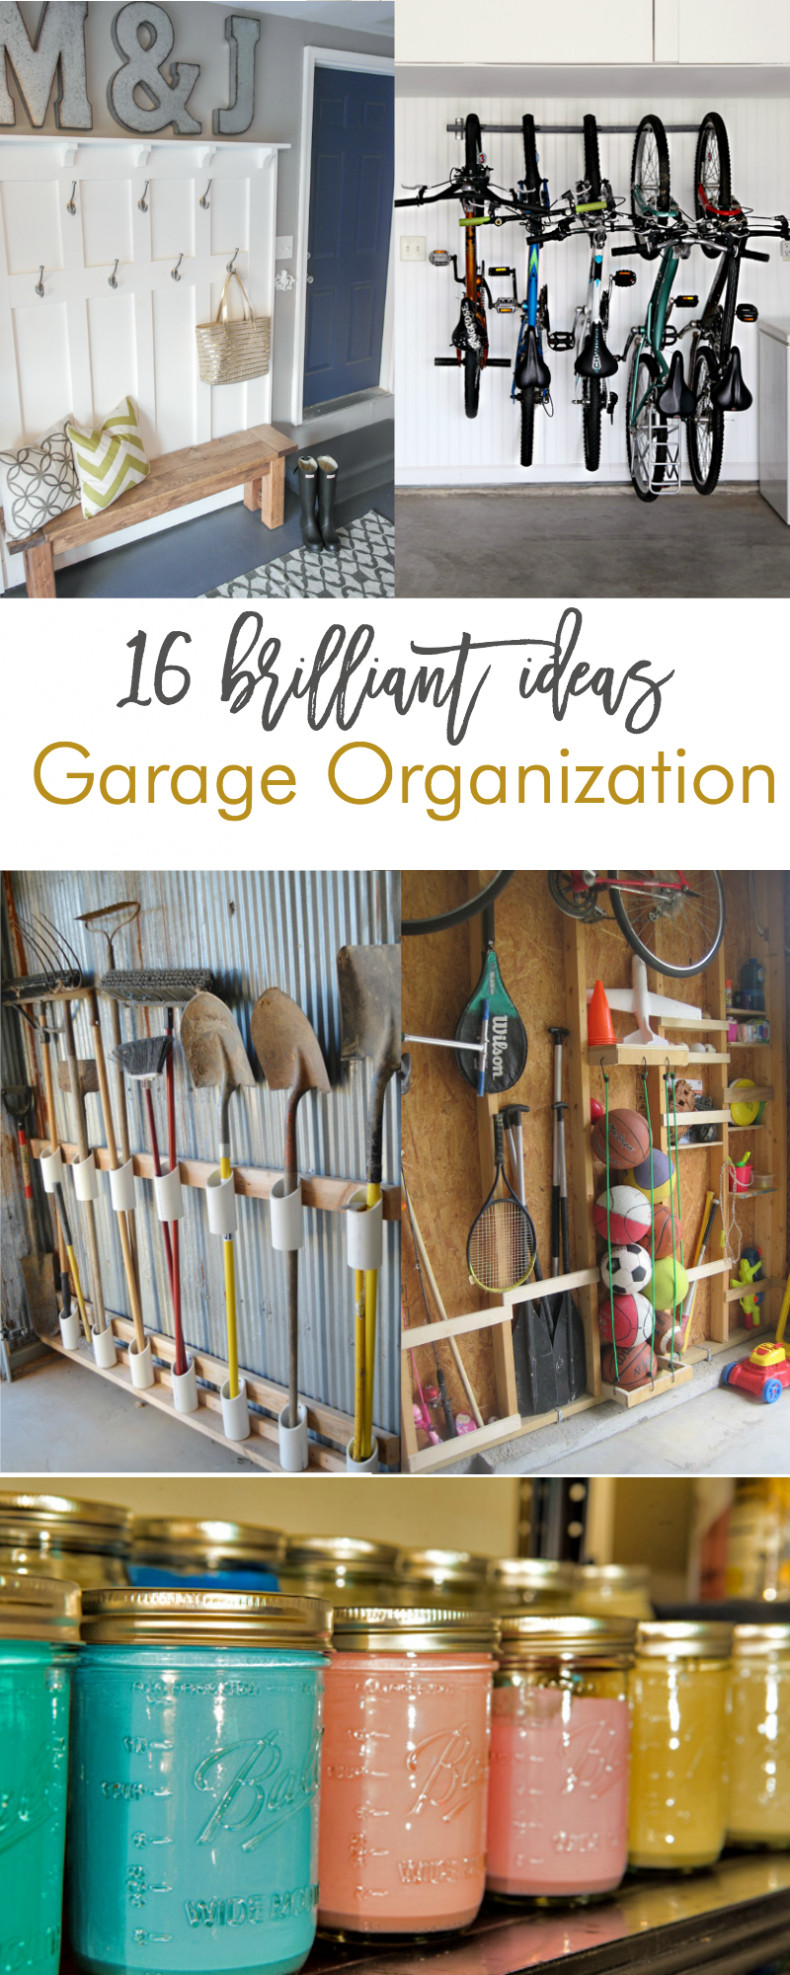 Garage Organization Ideas
 16 Brilliant DIY Garage Organization Ideas